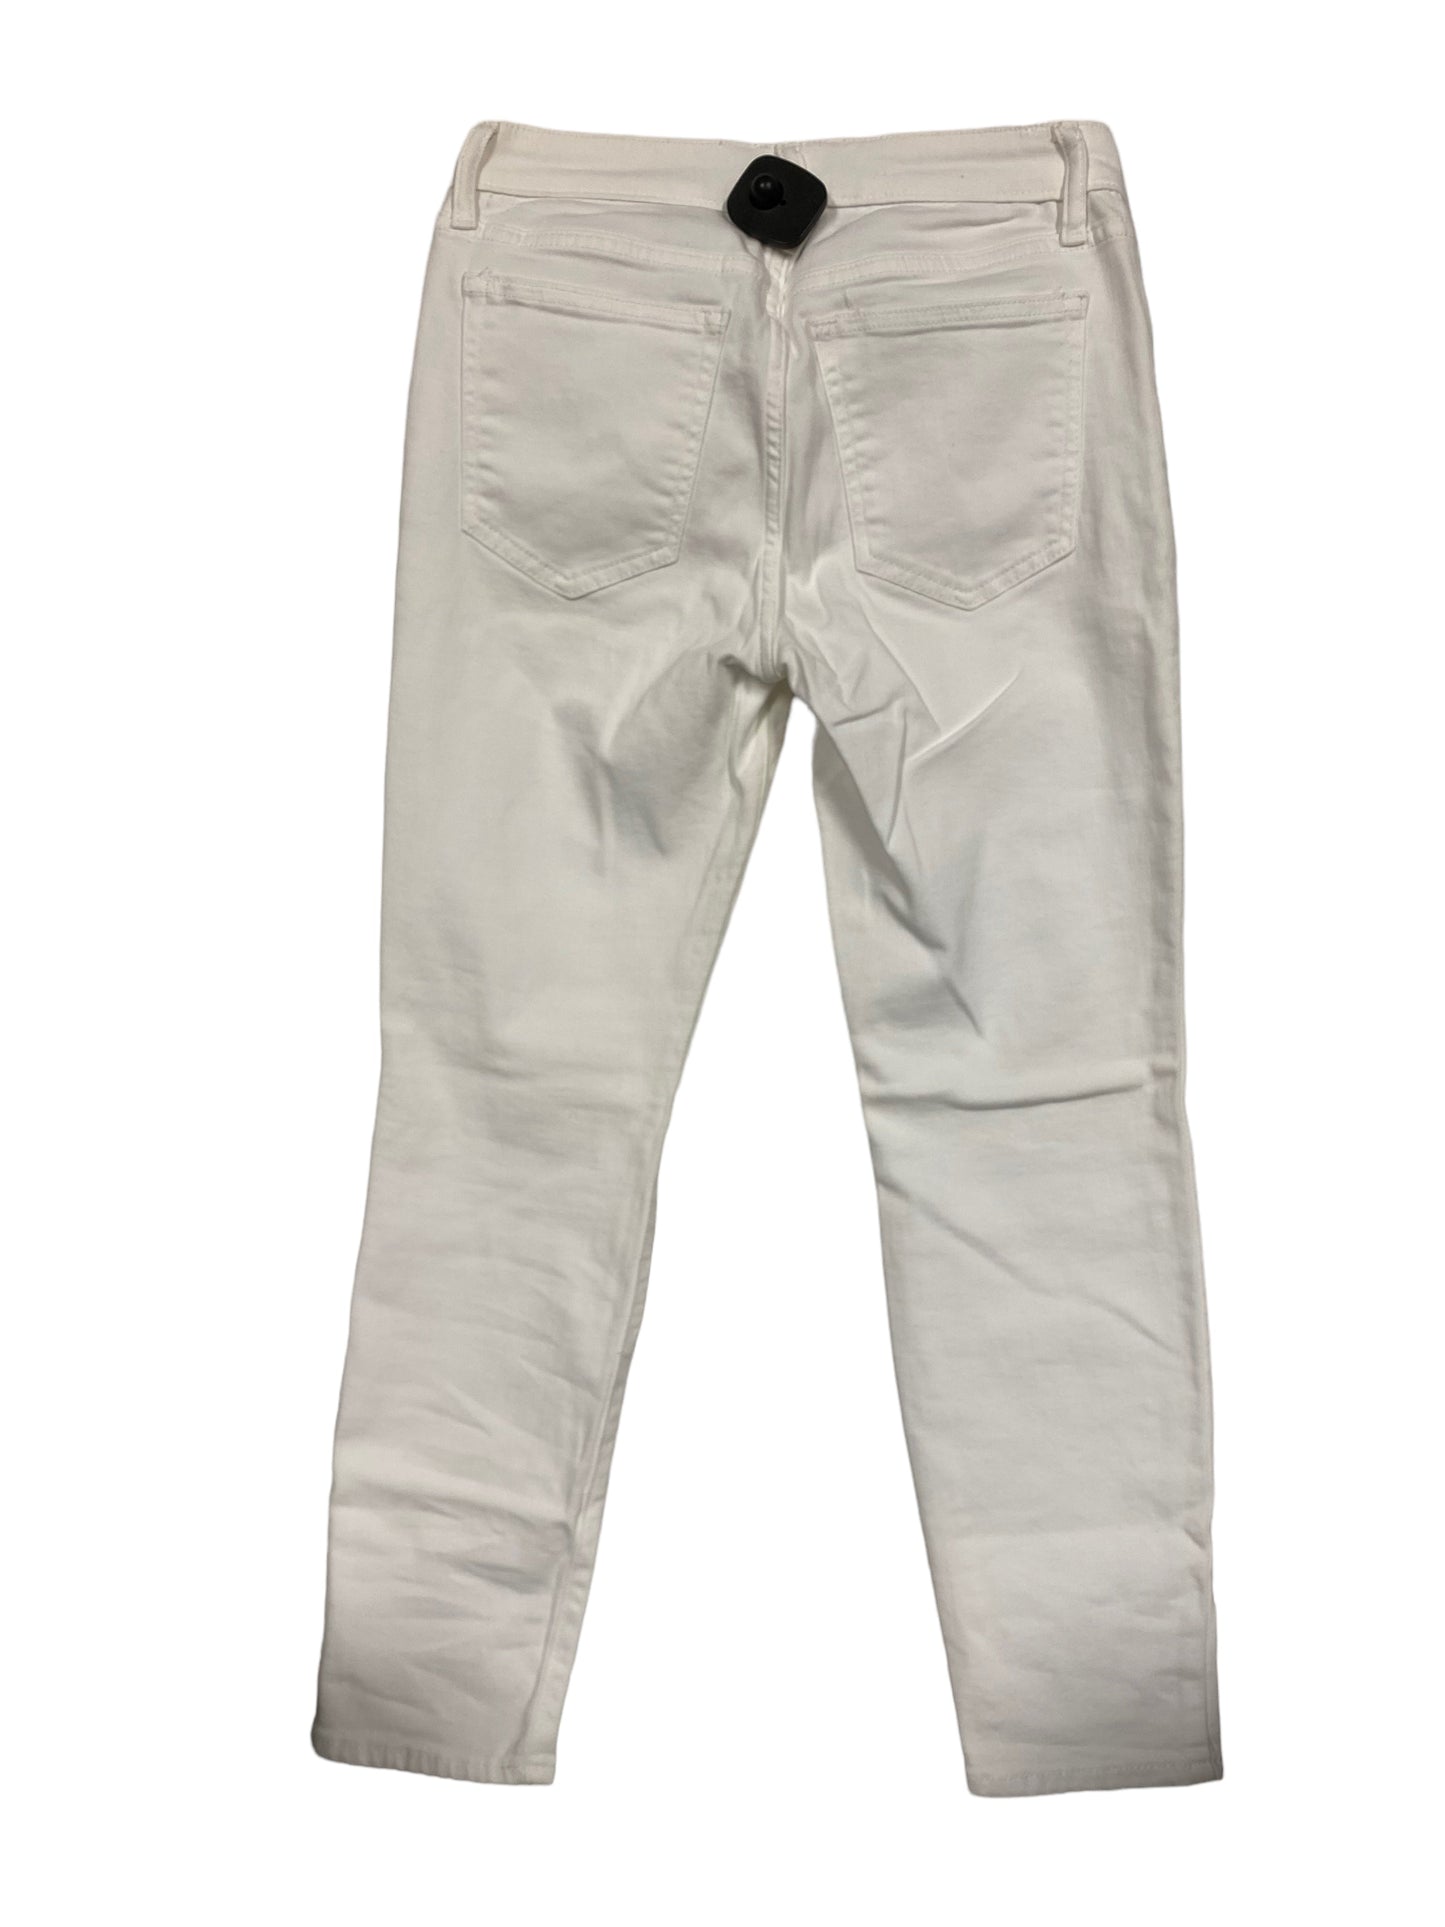 White Jeans Skinny Gap, Size 4